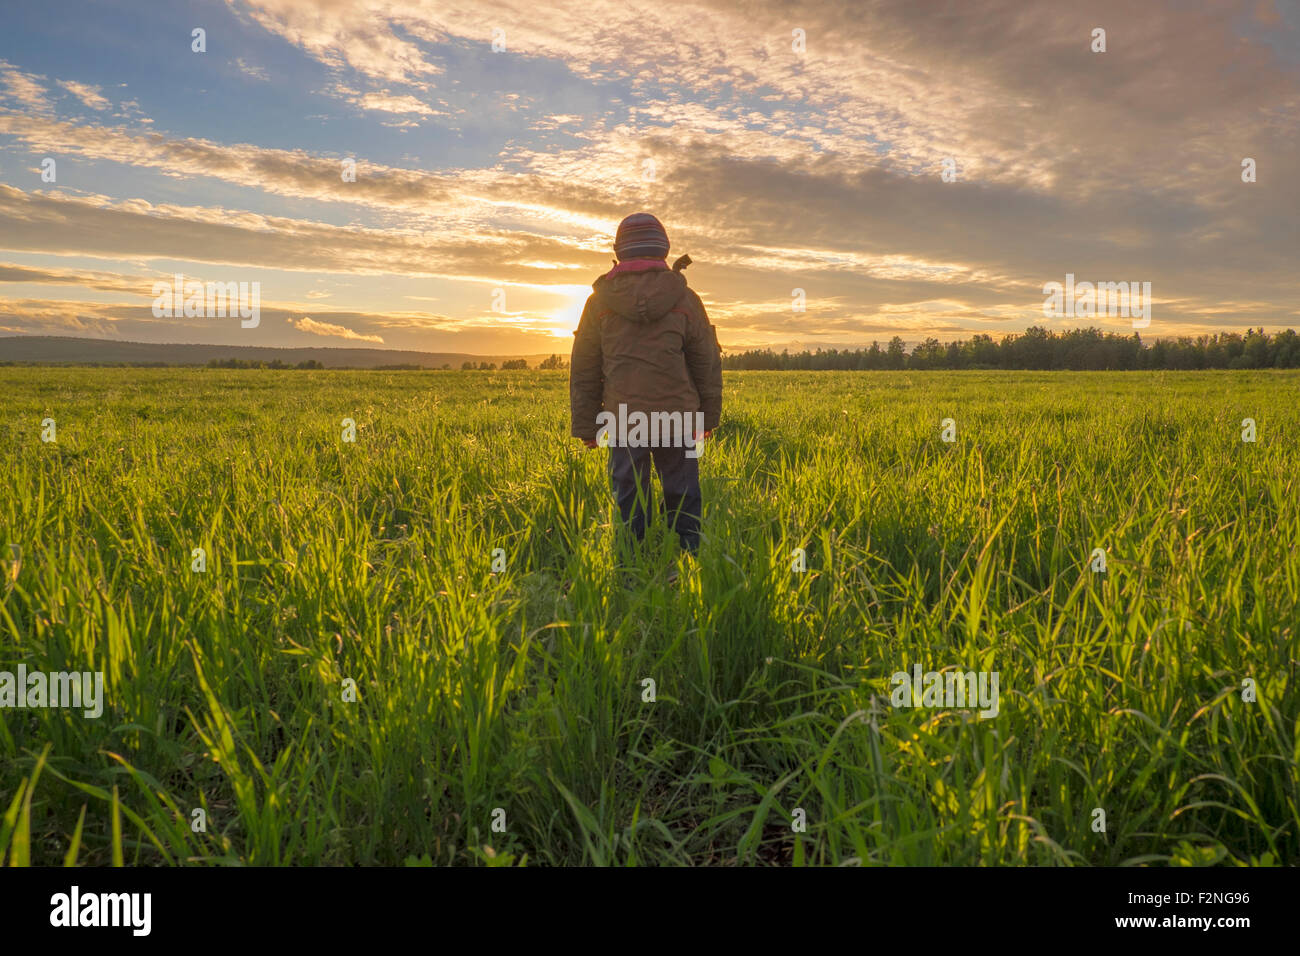 Mari boy admiring sunset in rural field Banque D'Images